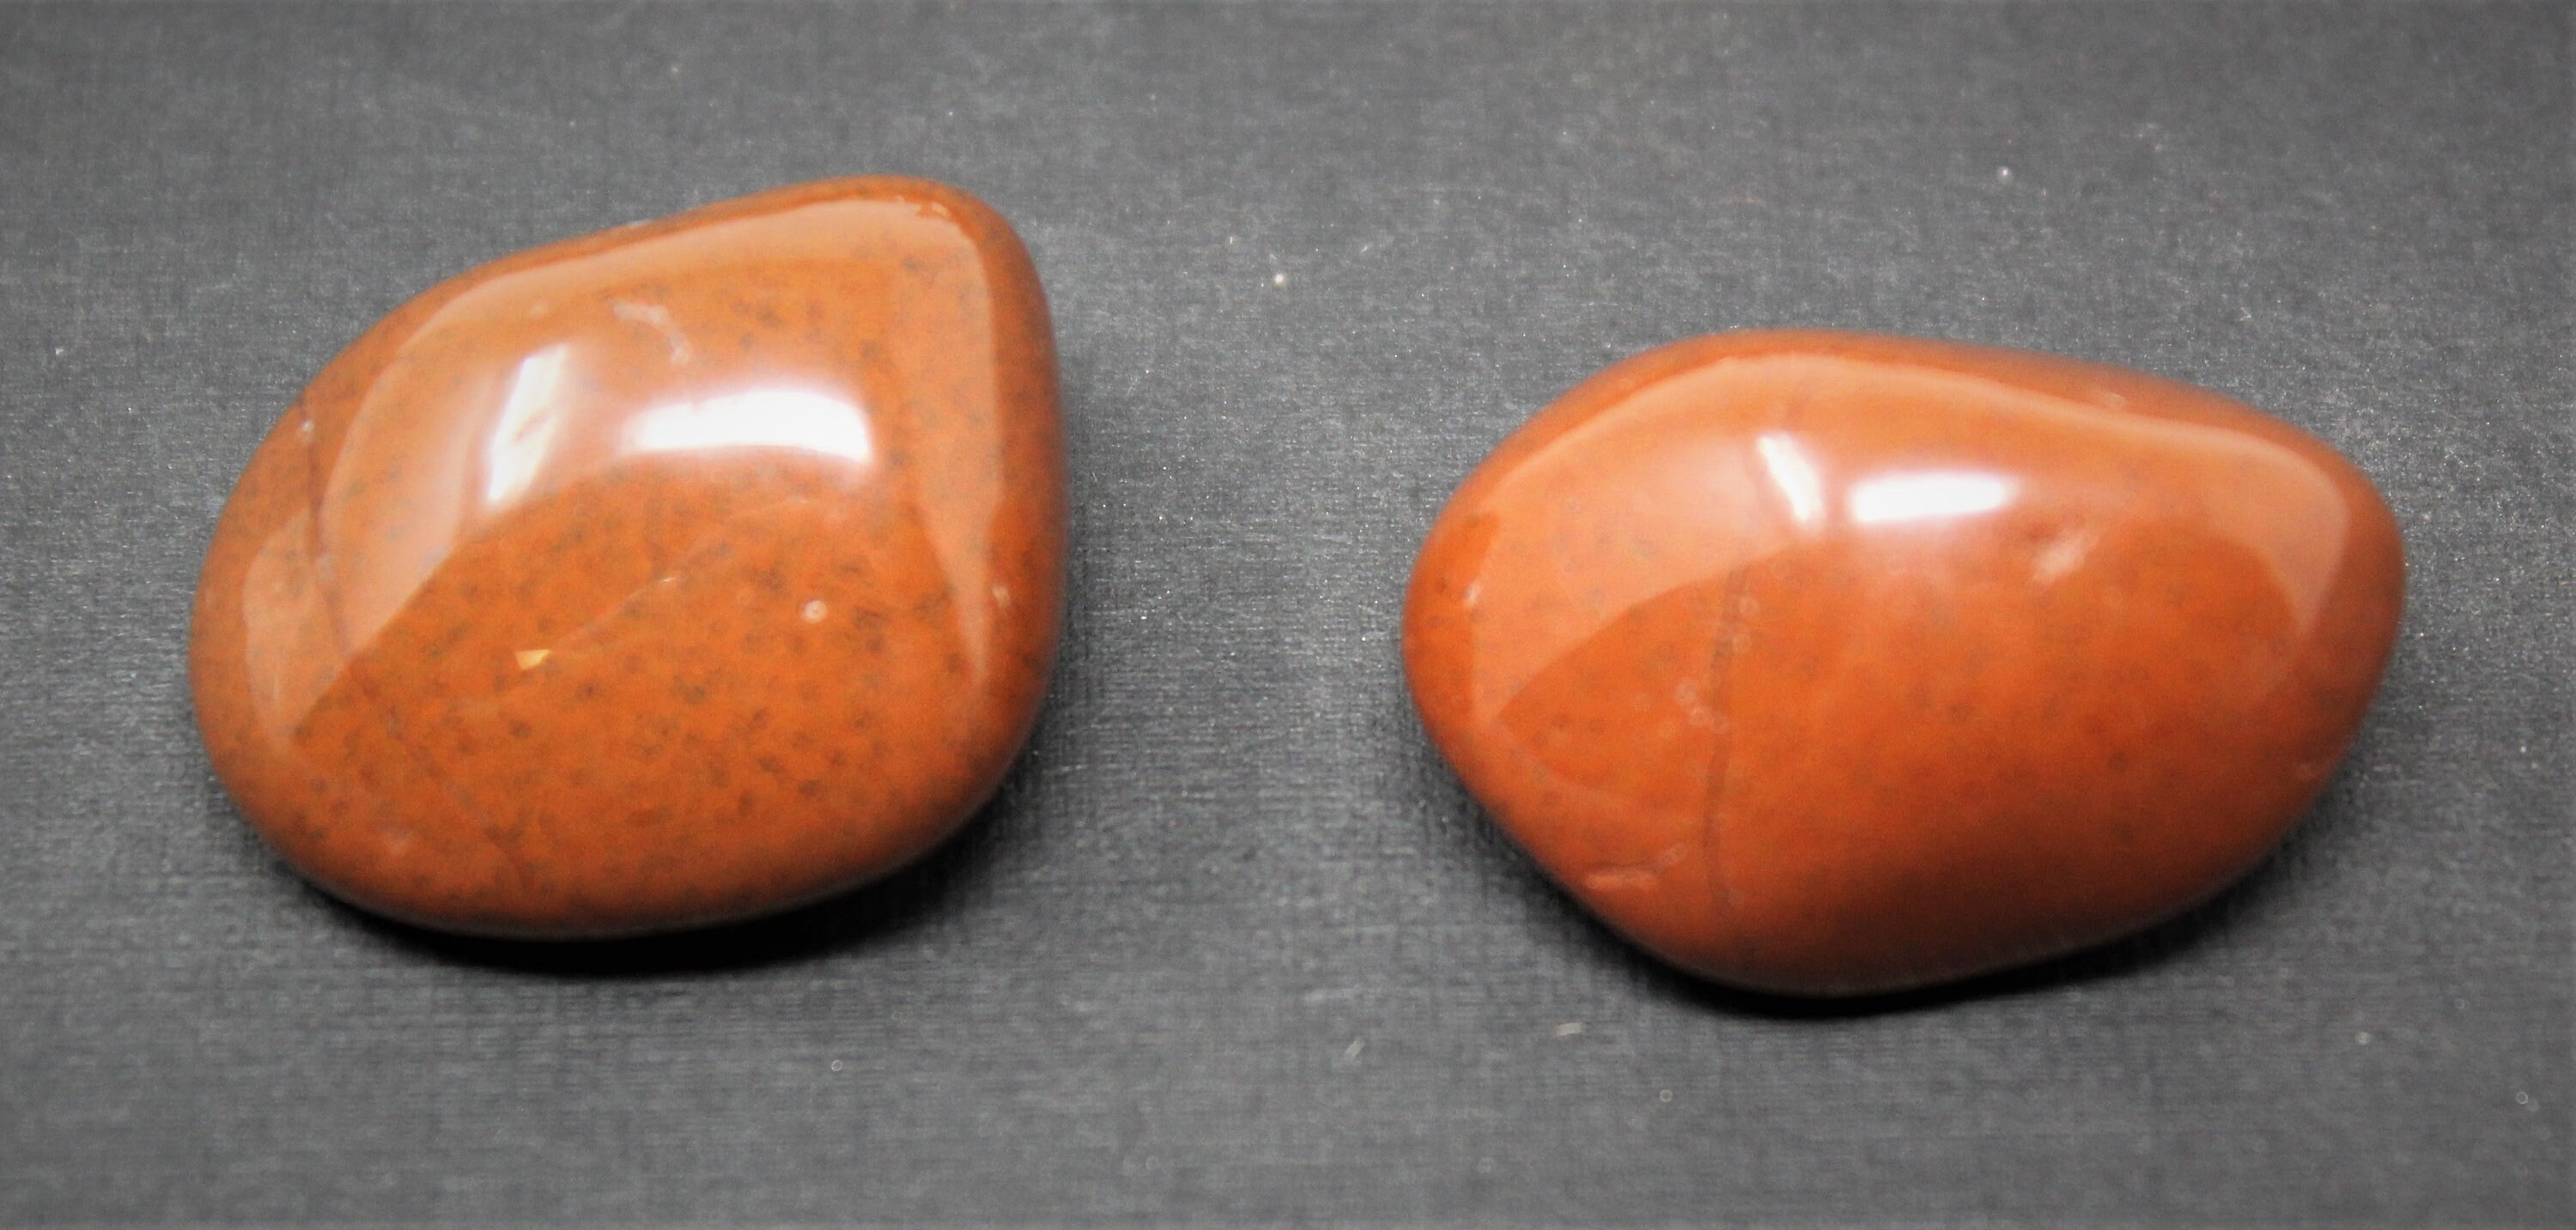 Red Jasper Tumbled Stones Choose 2 Oz 4 Oz 8 Oz Or 1 Lb Bulk Lots